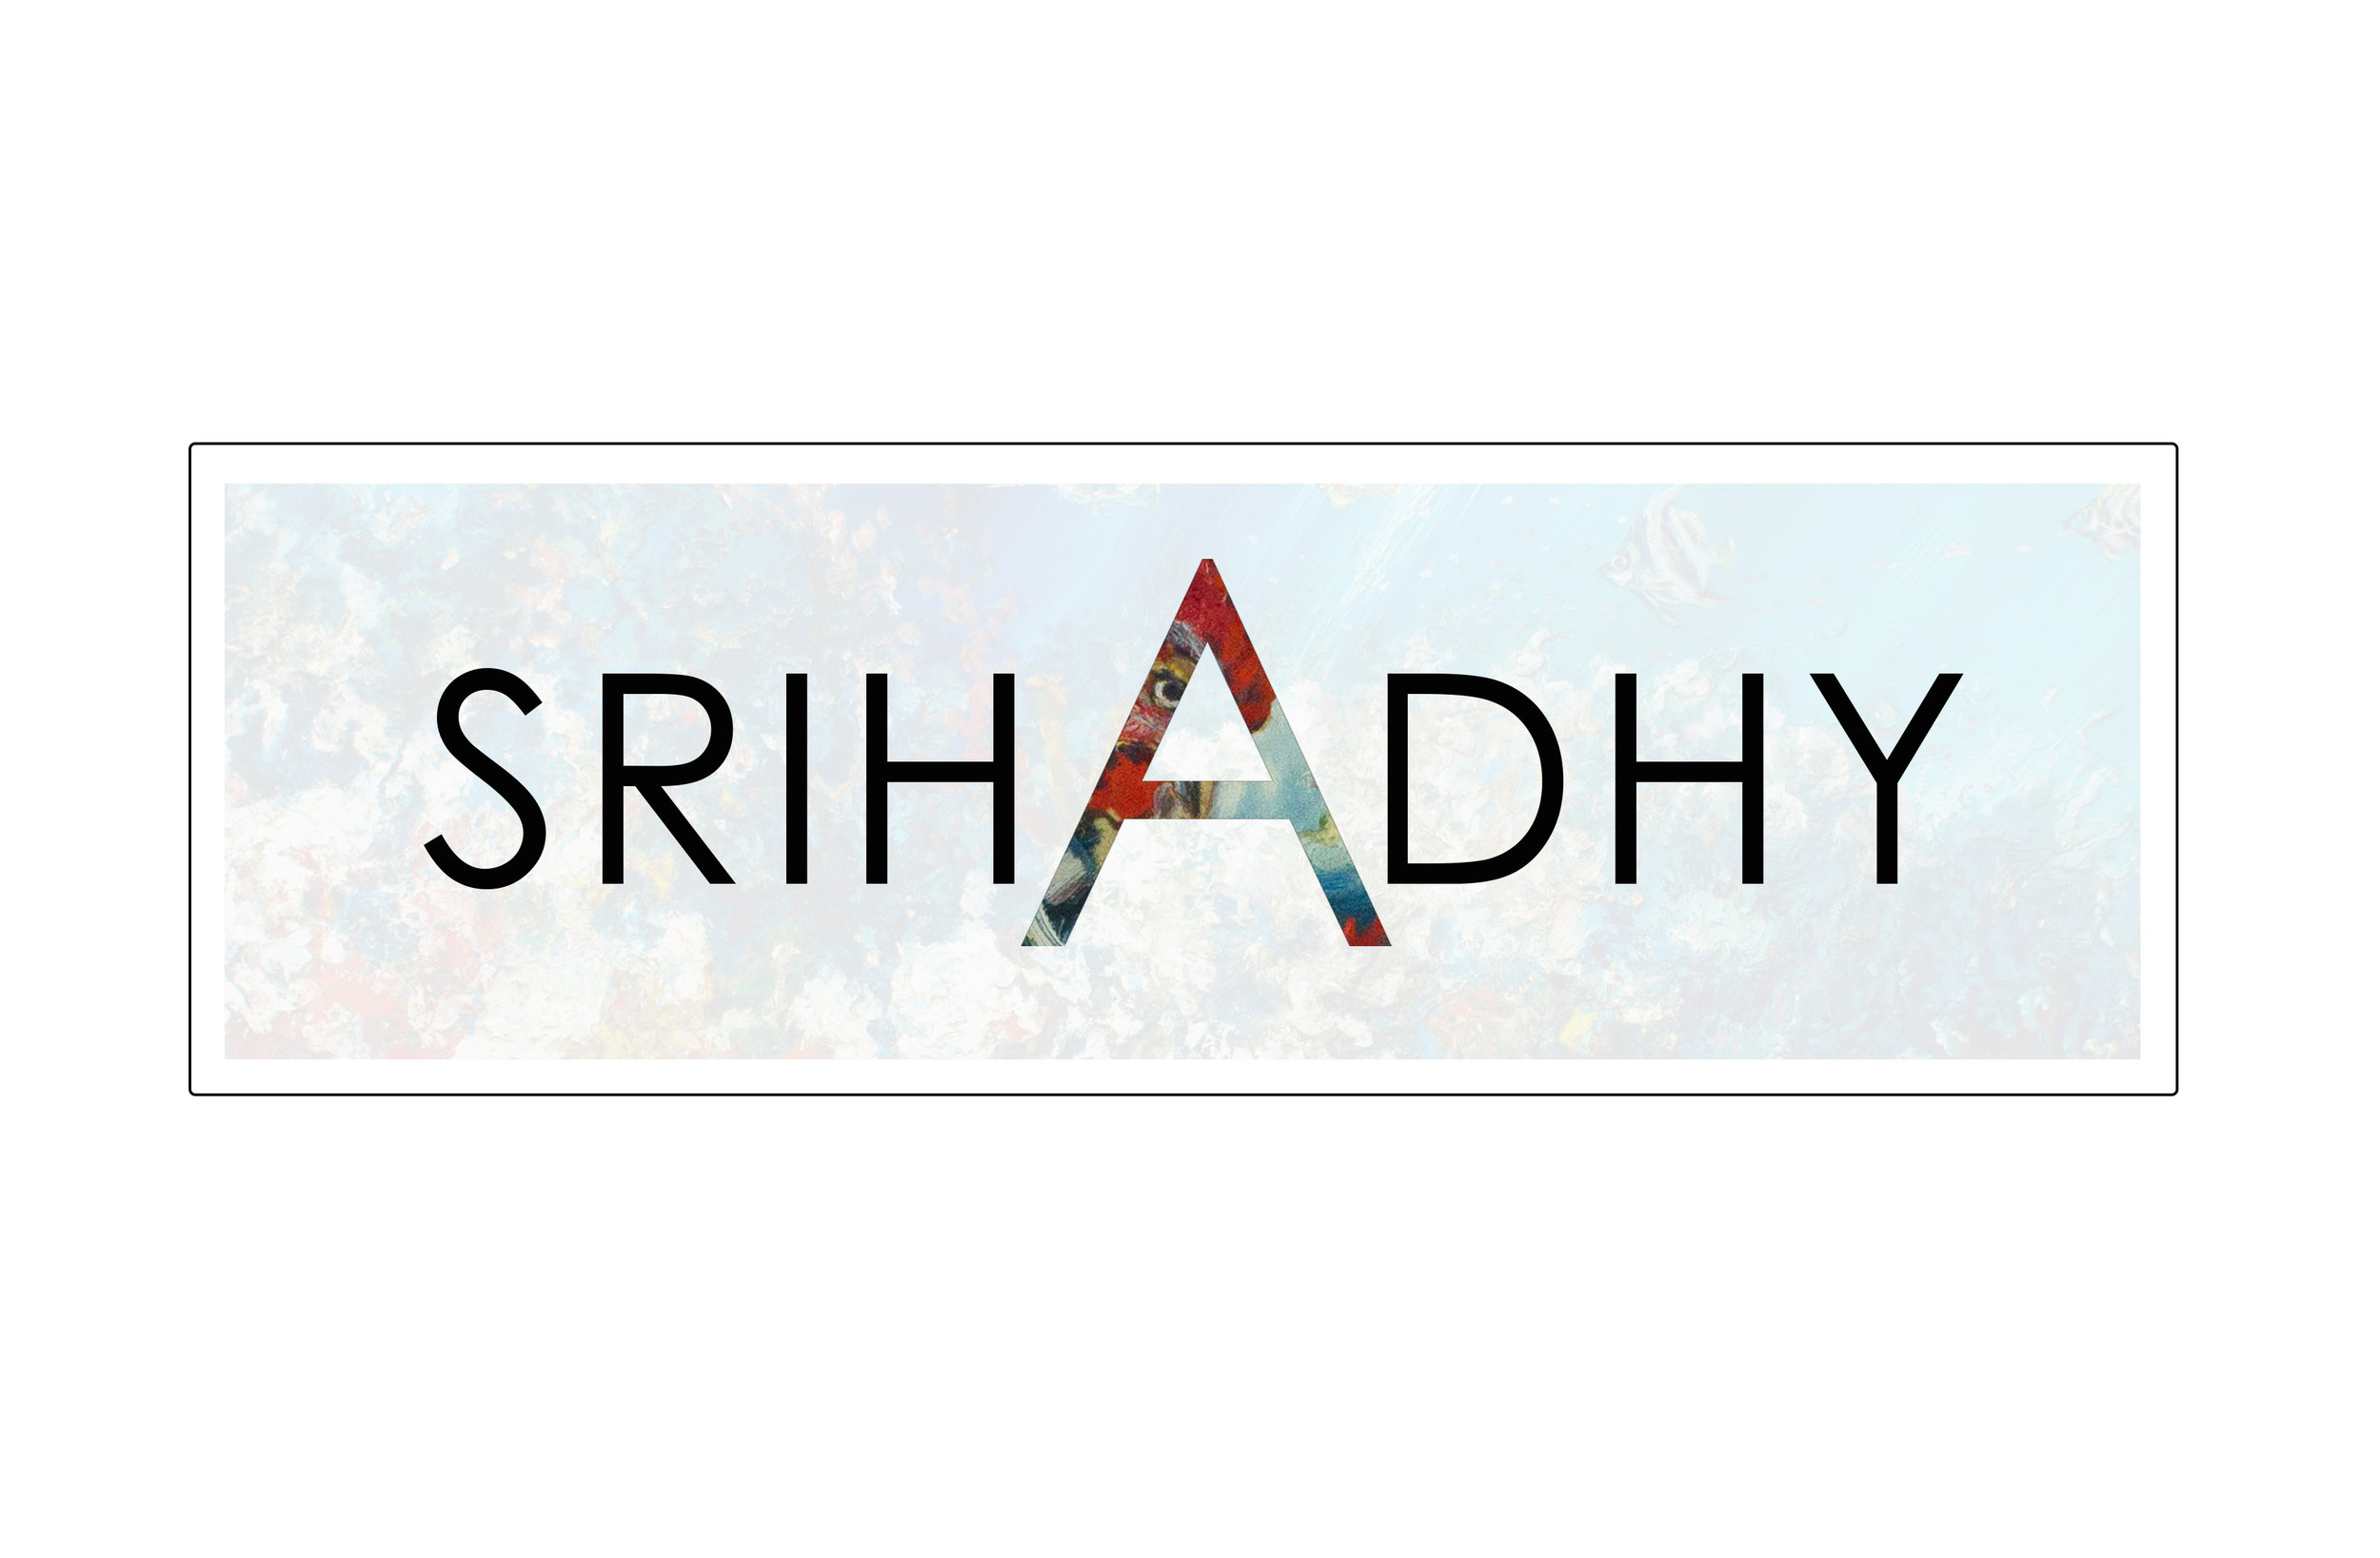 Srihadhy